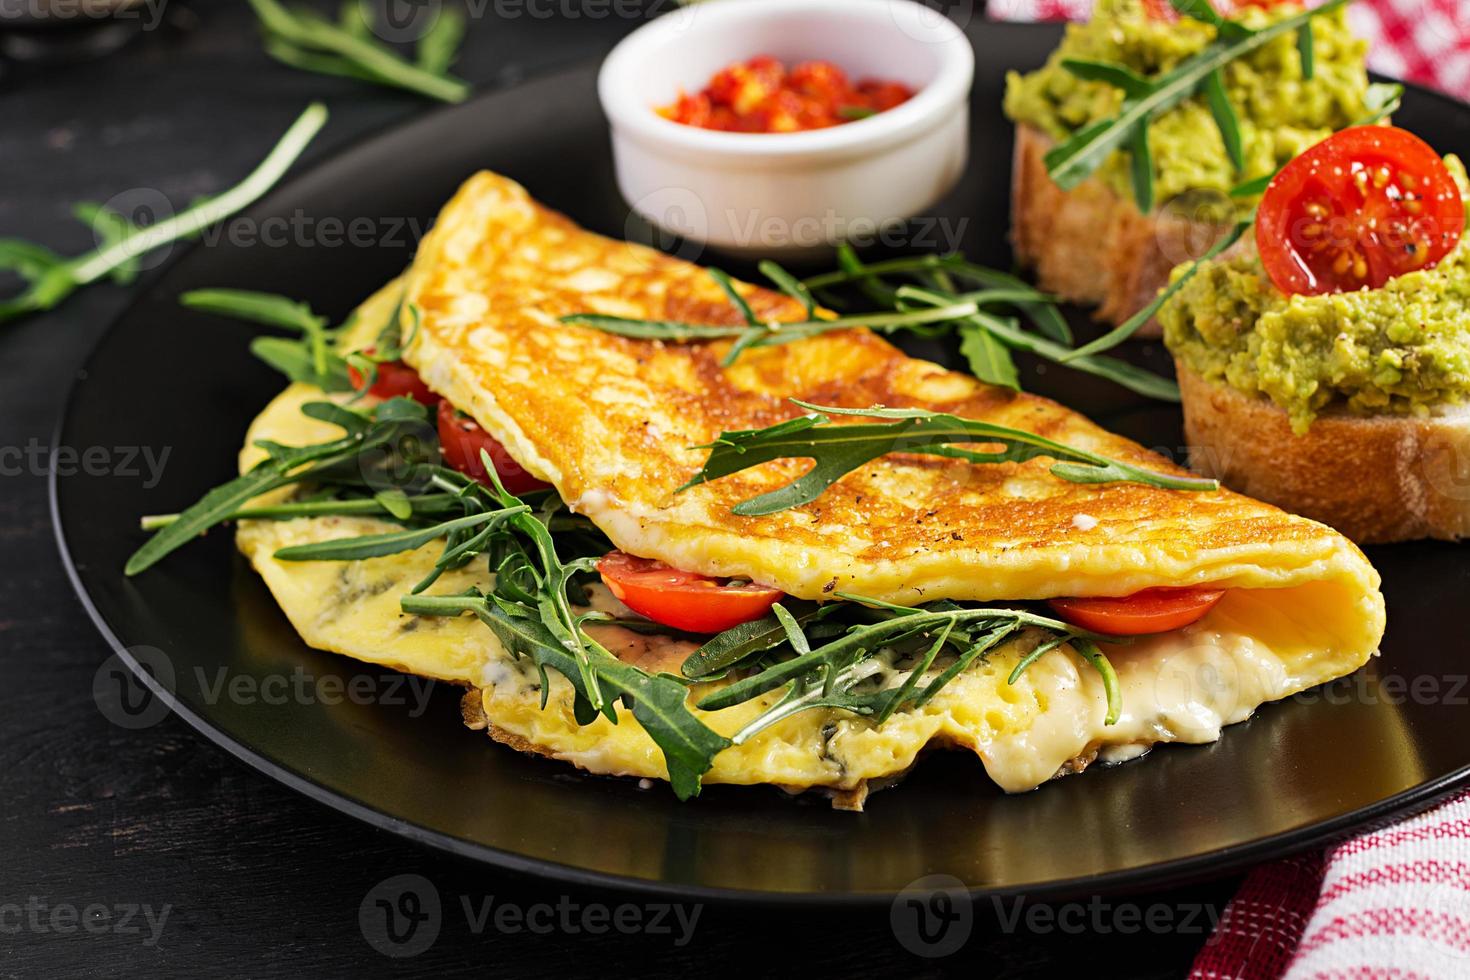 ontbijt. omelet met tomaten, kaas, groen rucola en toast met avocado room Aan zwart bord. frittata - Italiaans omelet. foto